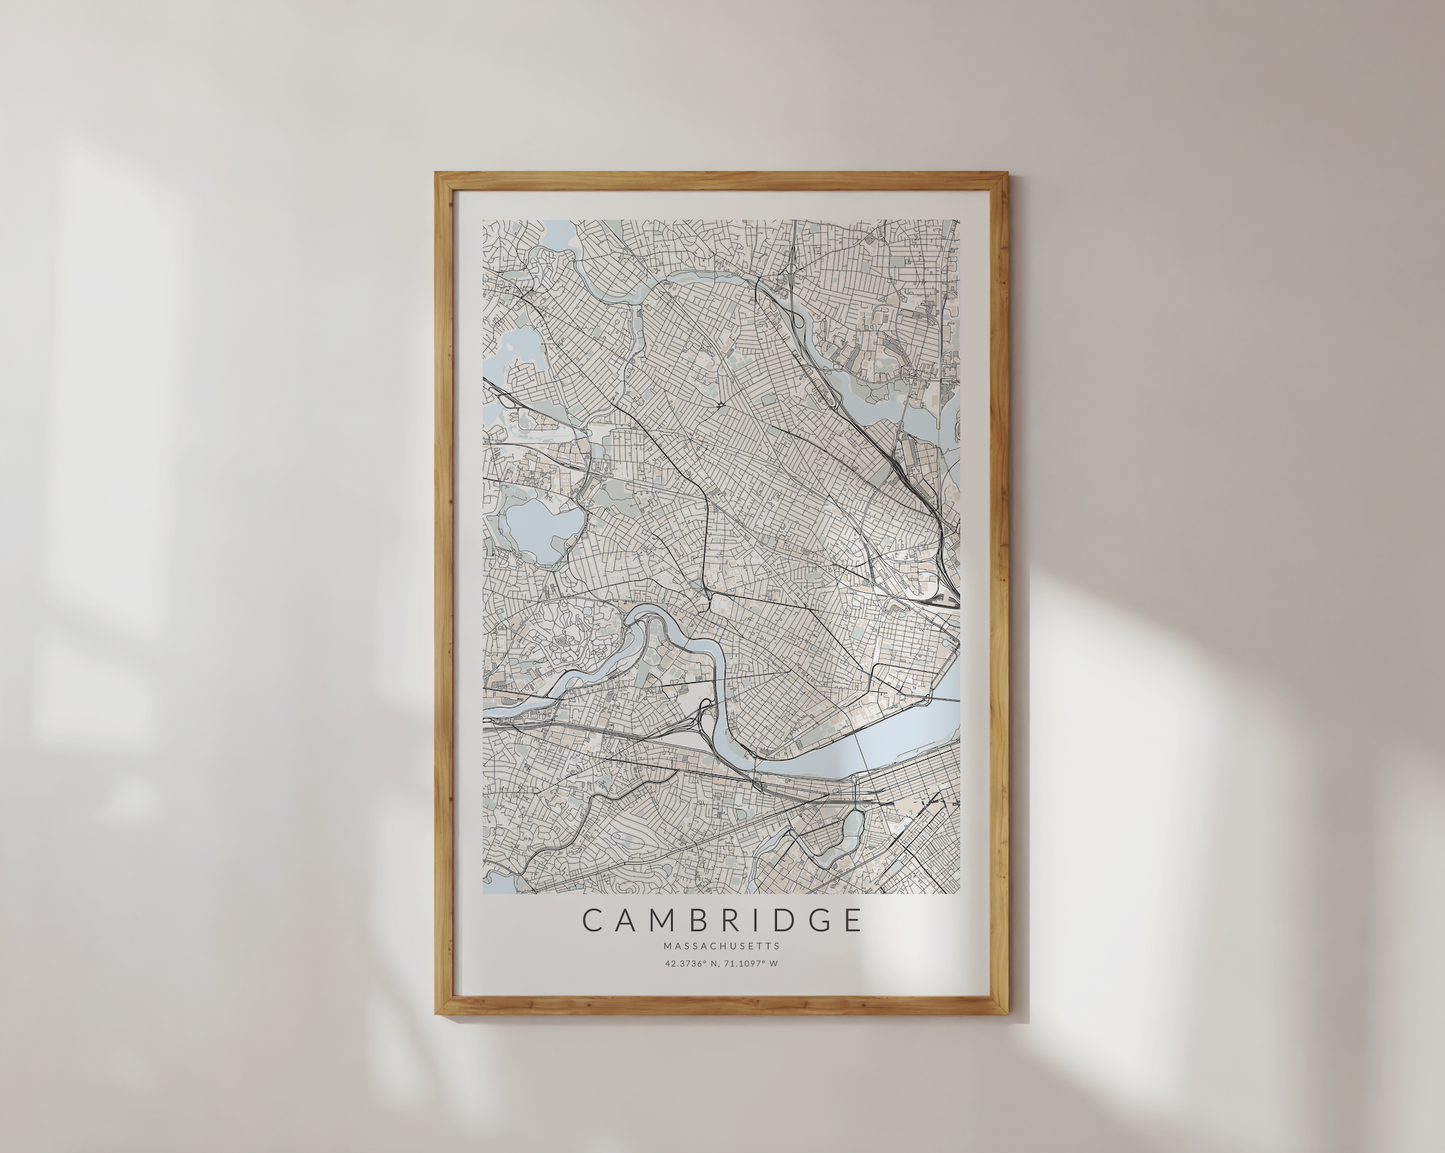 Cambridge Massachusetts Map Print